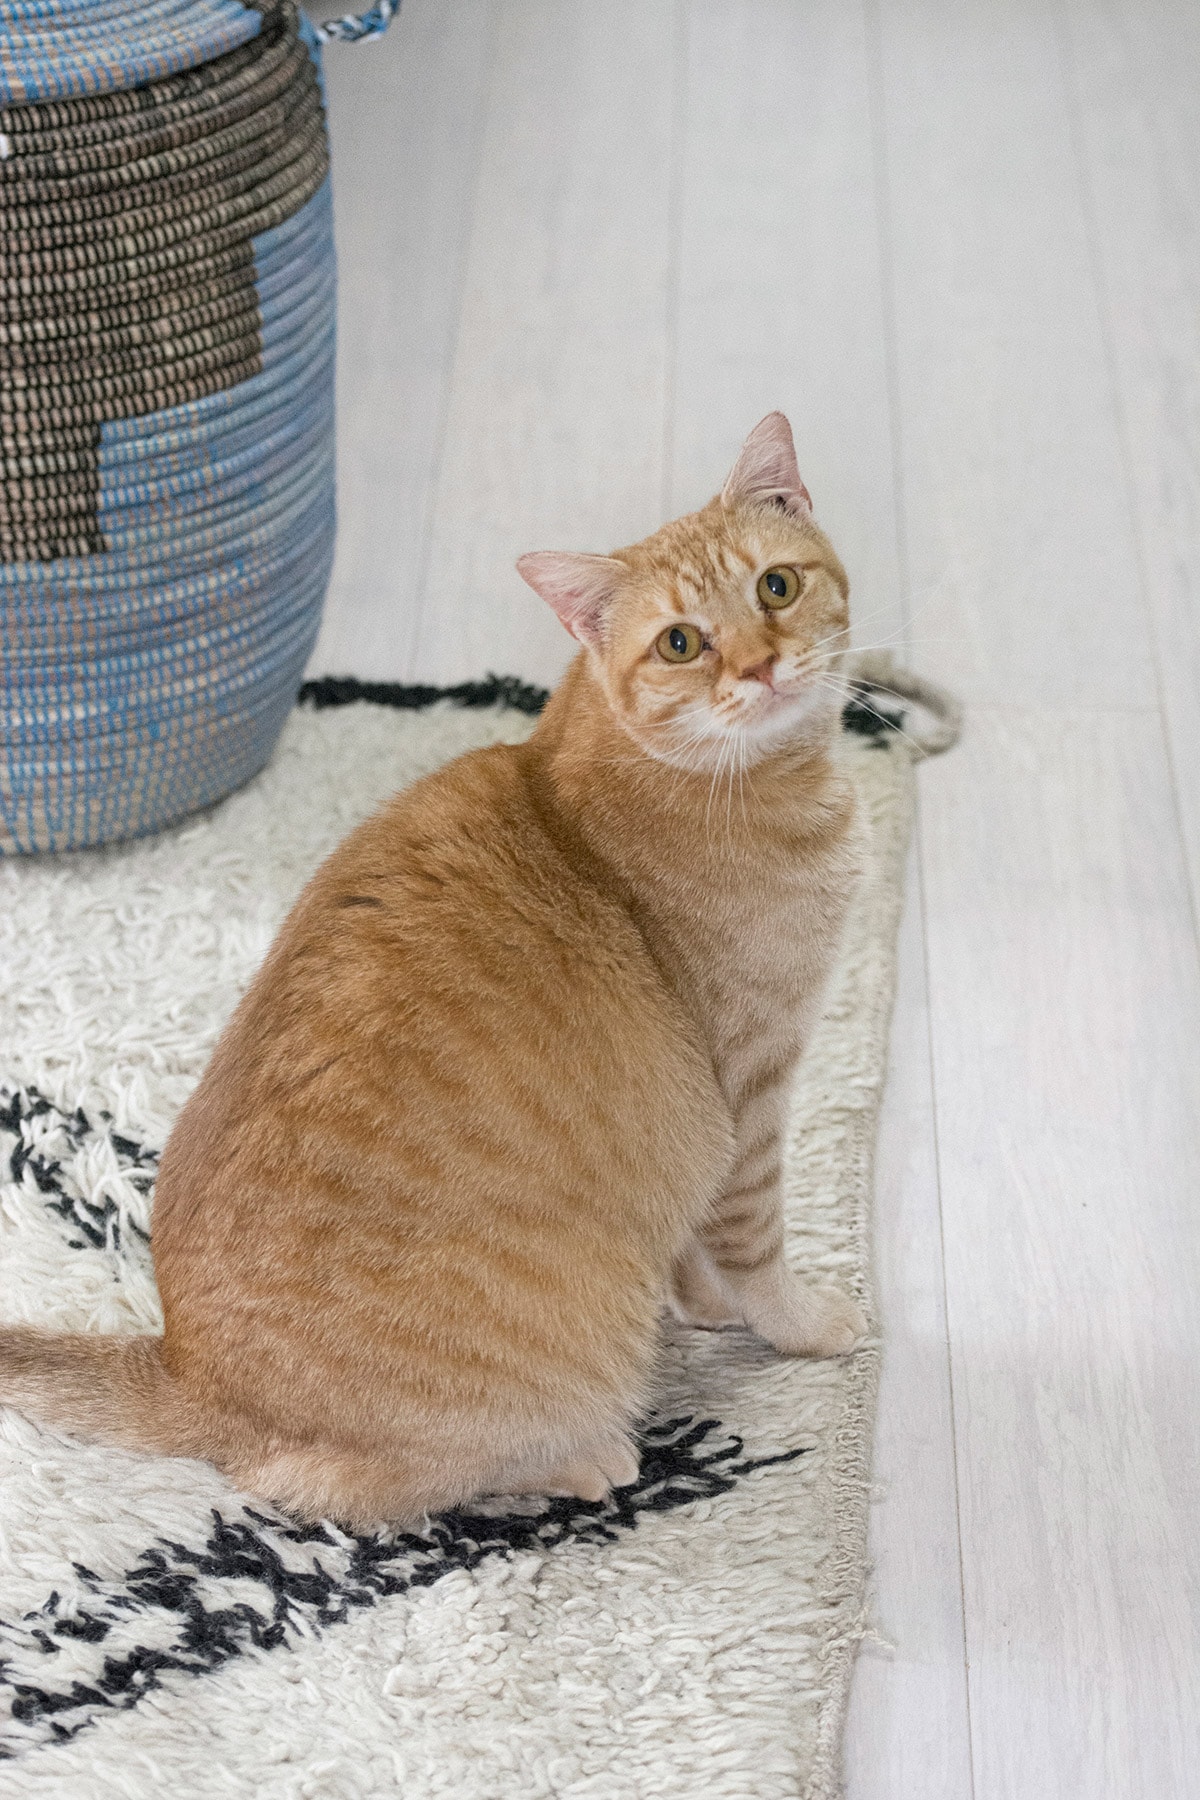  cat sitting on rug